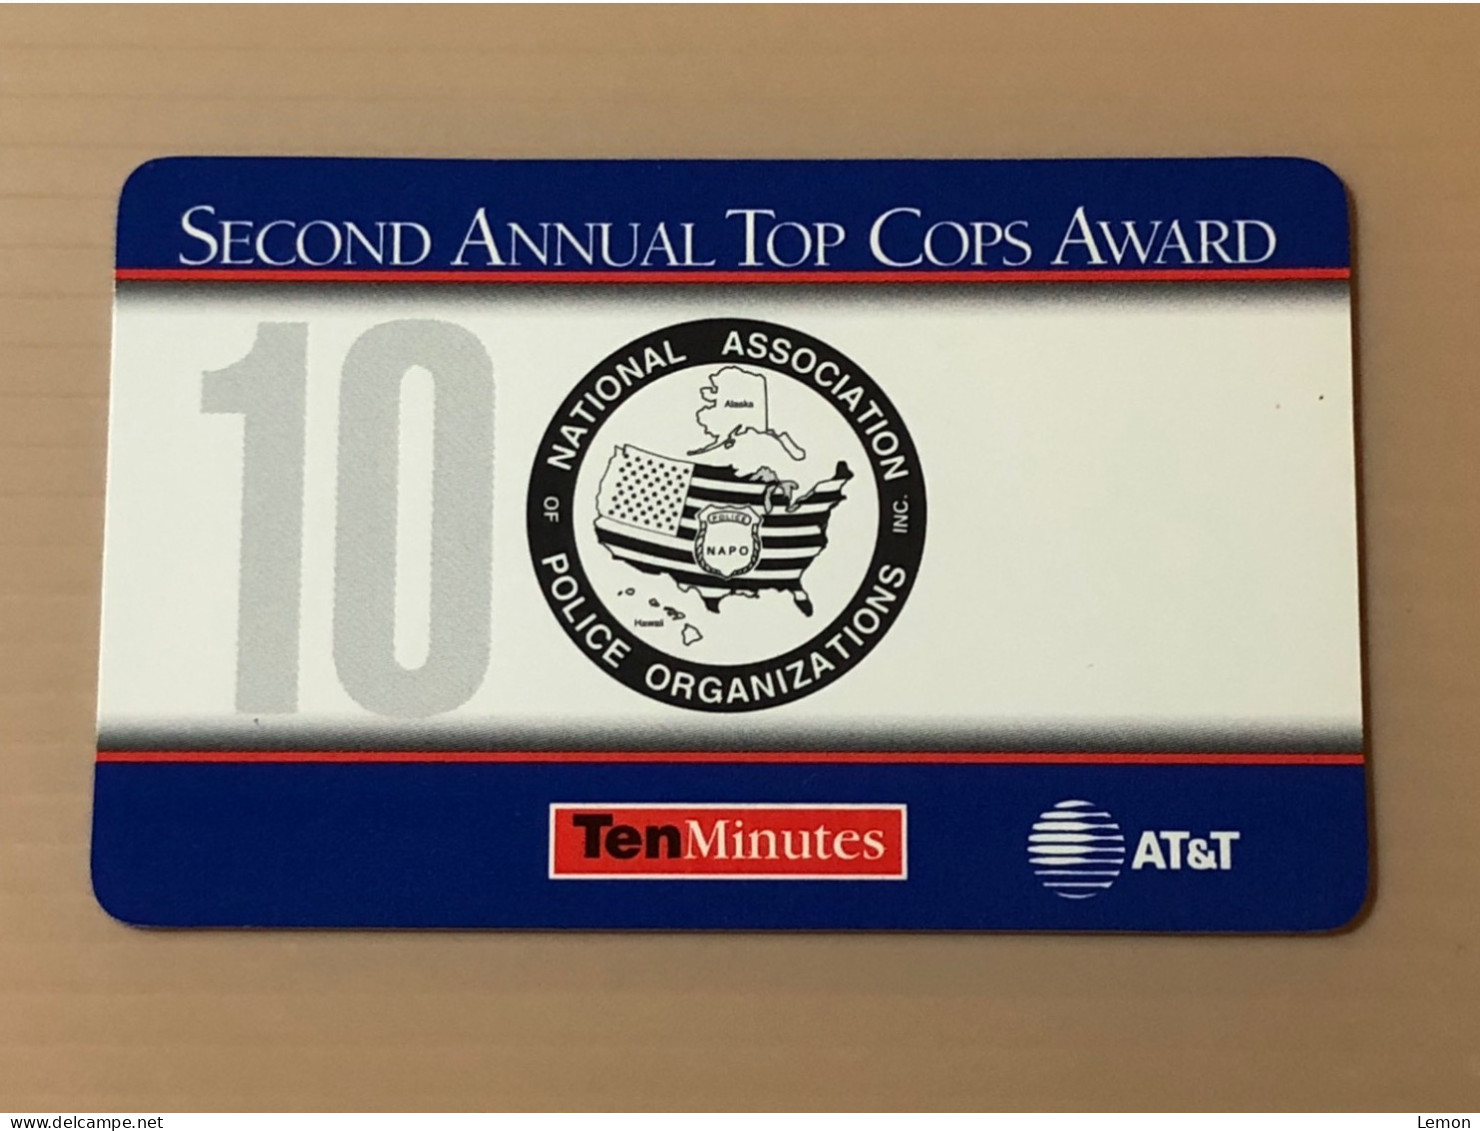 Mint USA UNITED STATES America Prepaid Telecard Phonecard, AT&T Annual Top Cops Award SAMPLE CARD, Set Of 1 Mint Card - Sammlungen